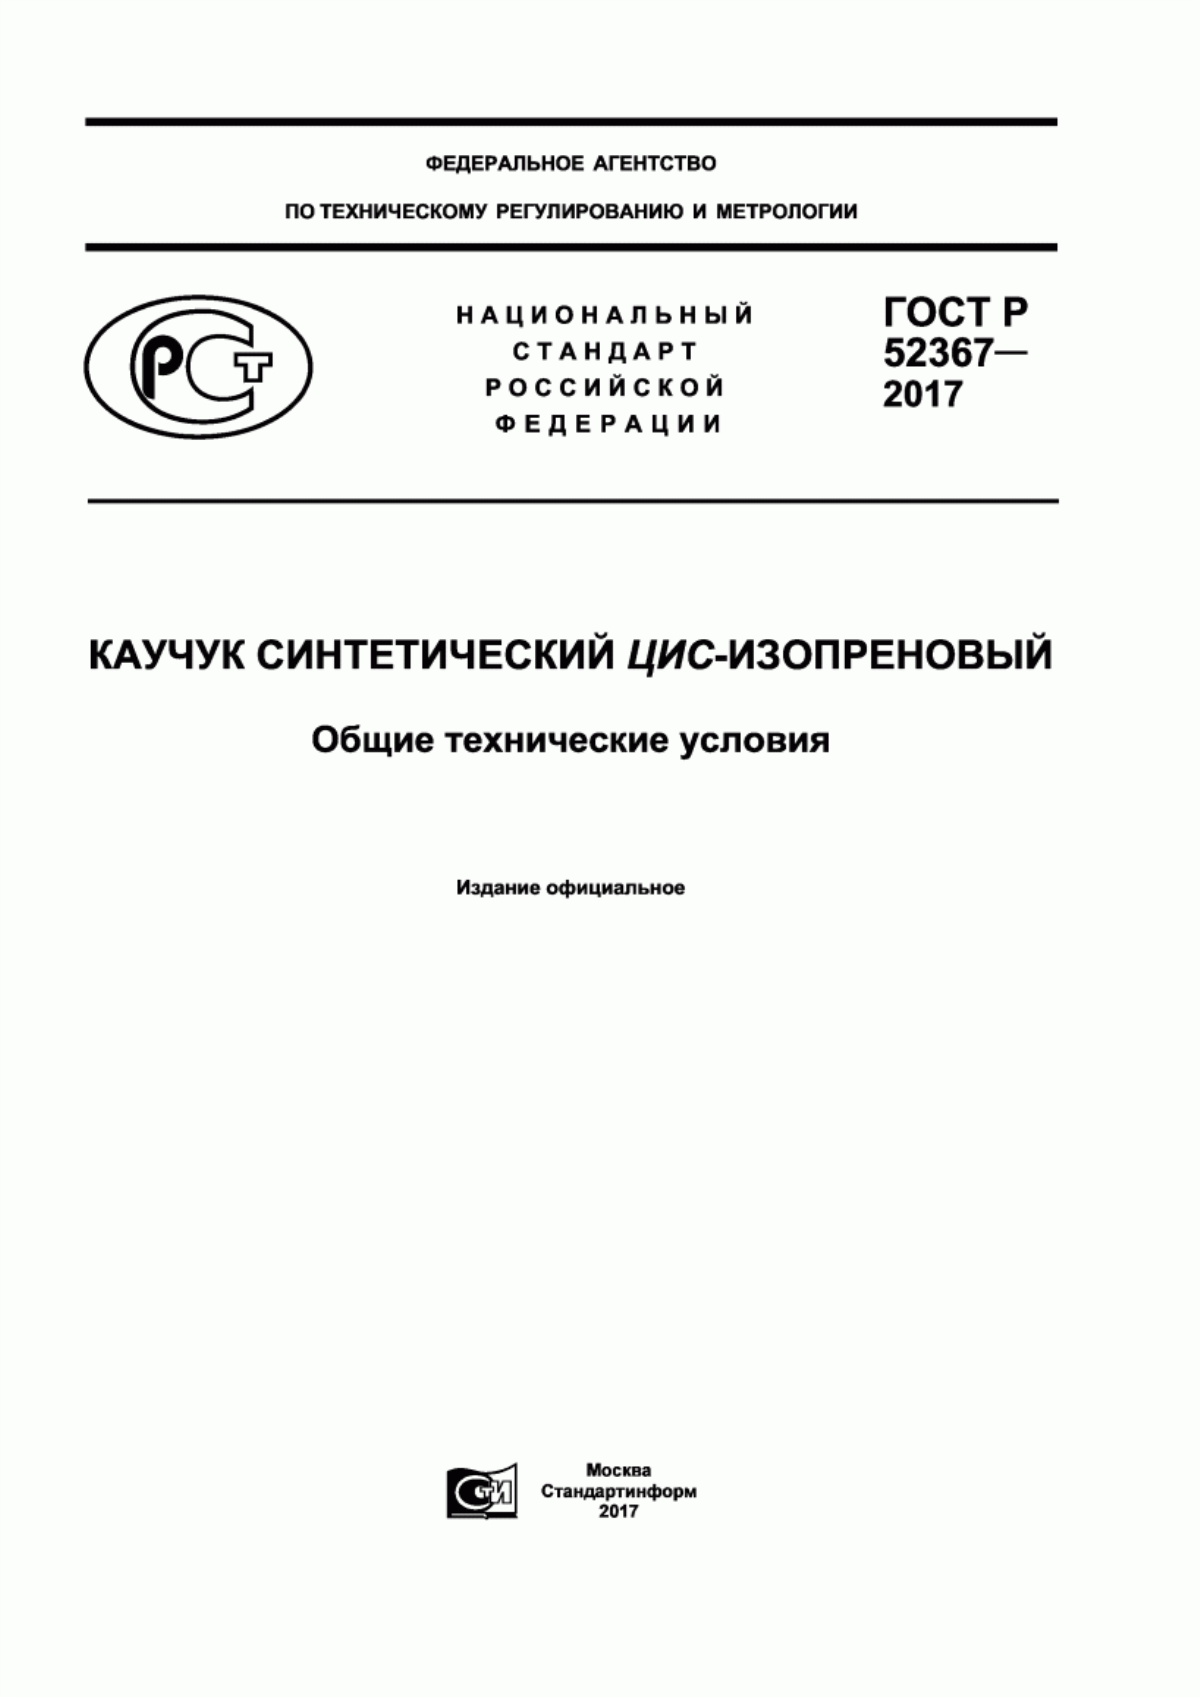 ГОСТ Р 52367-2017 Каучук синтетический цис-изопропеновый. Общие технические условия